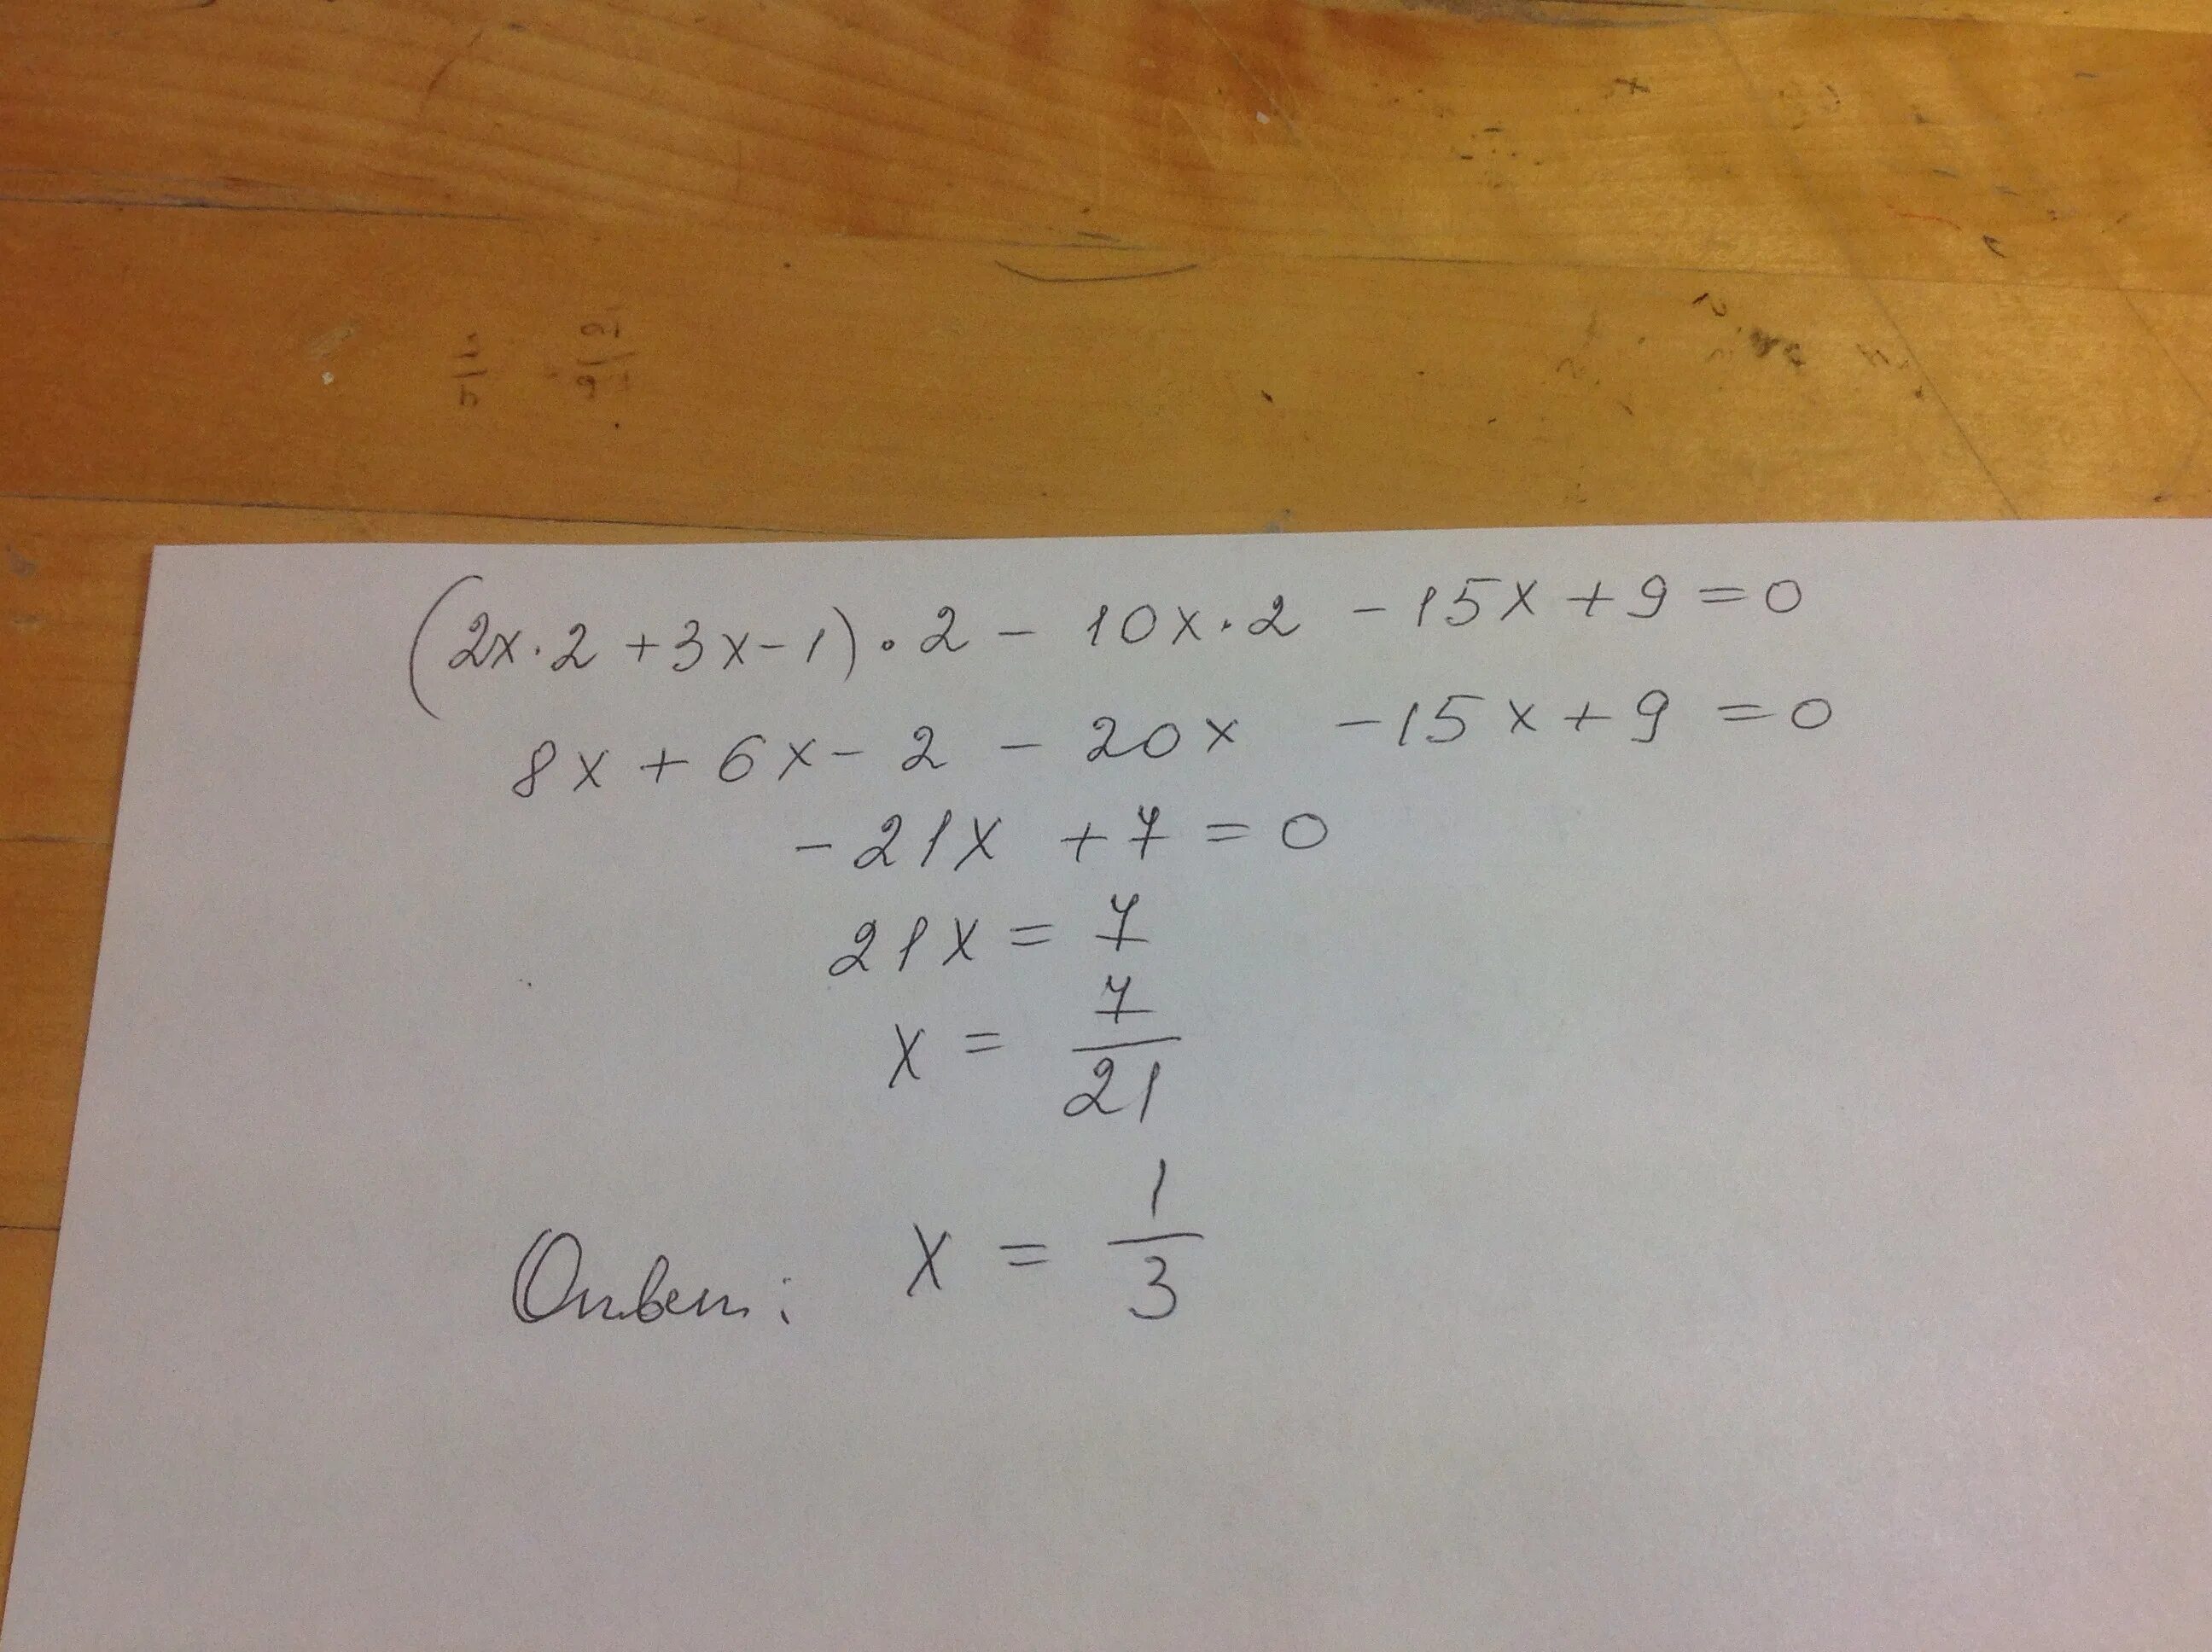 X3-2x2-2x+1. 10x 15 уравнение решении. 1/2x2-10. (X - 15) + (3x - 7) = 2(x−15)+(3x−7)=2.